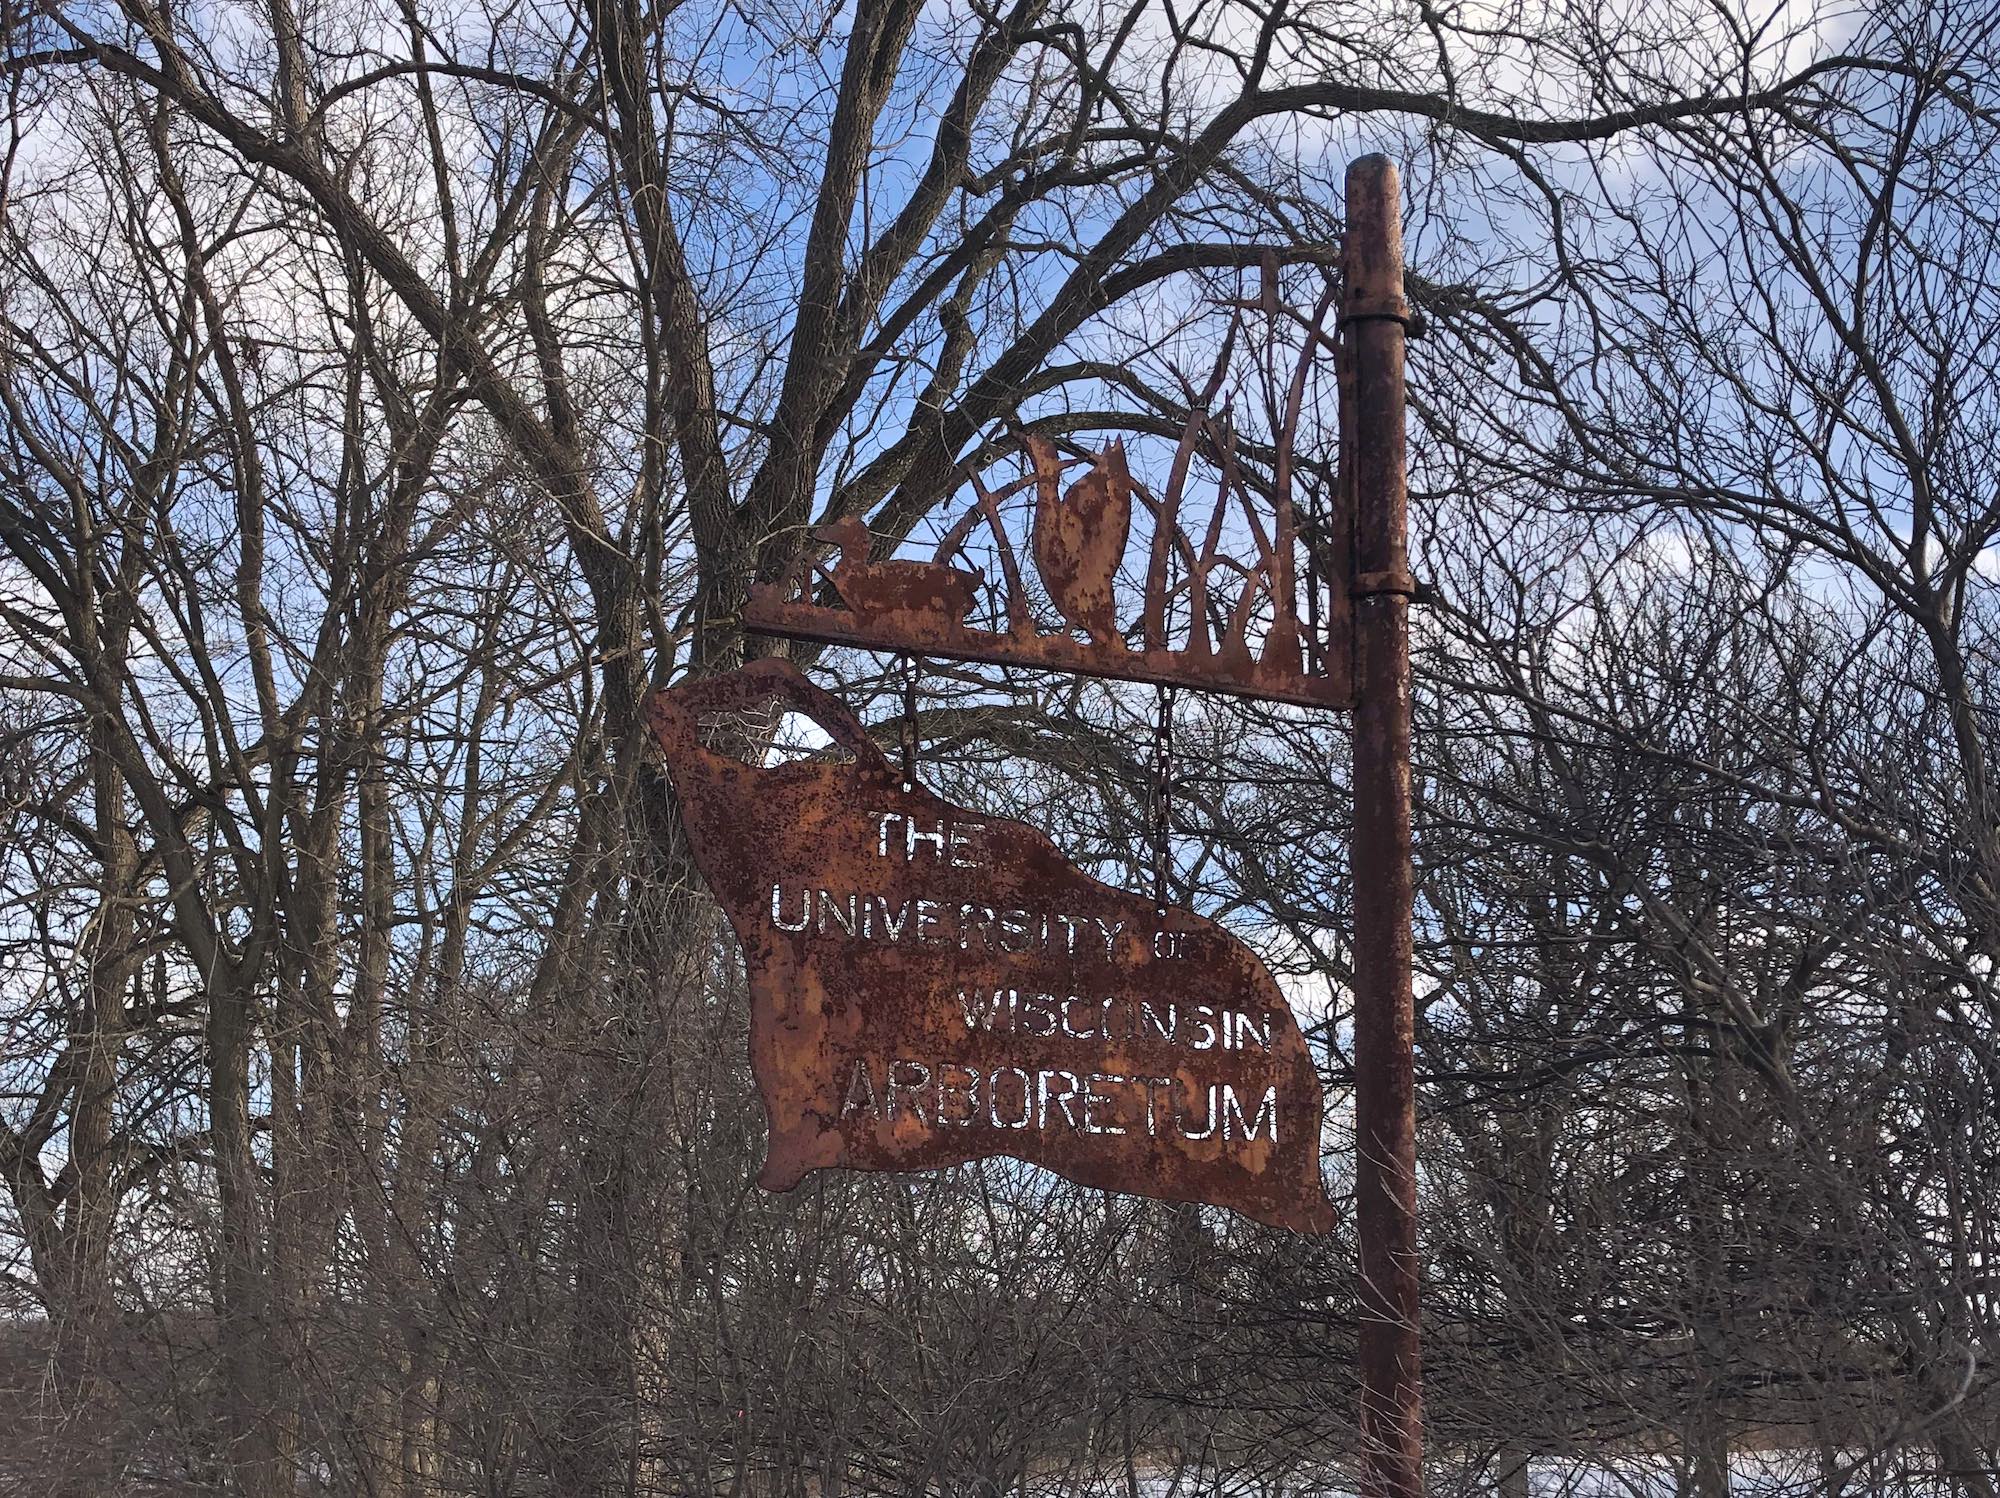 Metal cutout sign at the University of Wisconsin Arboretum Monroe Street Parking lot near the Oak Savanna.